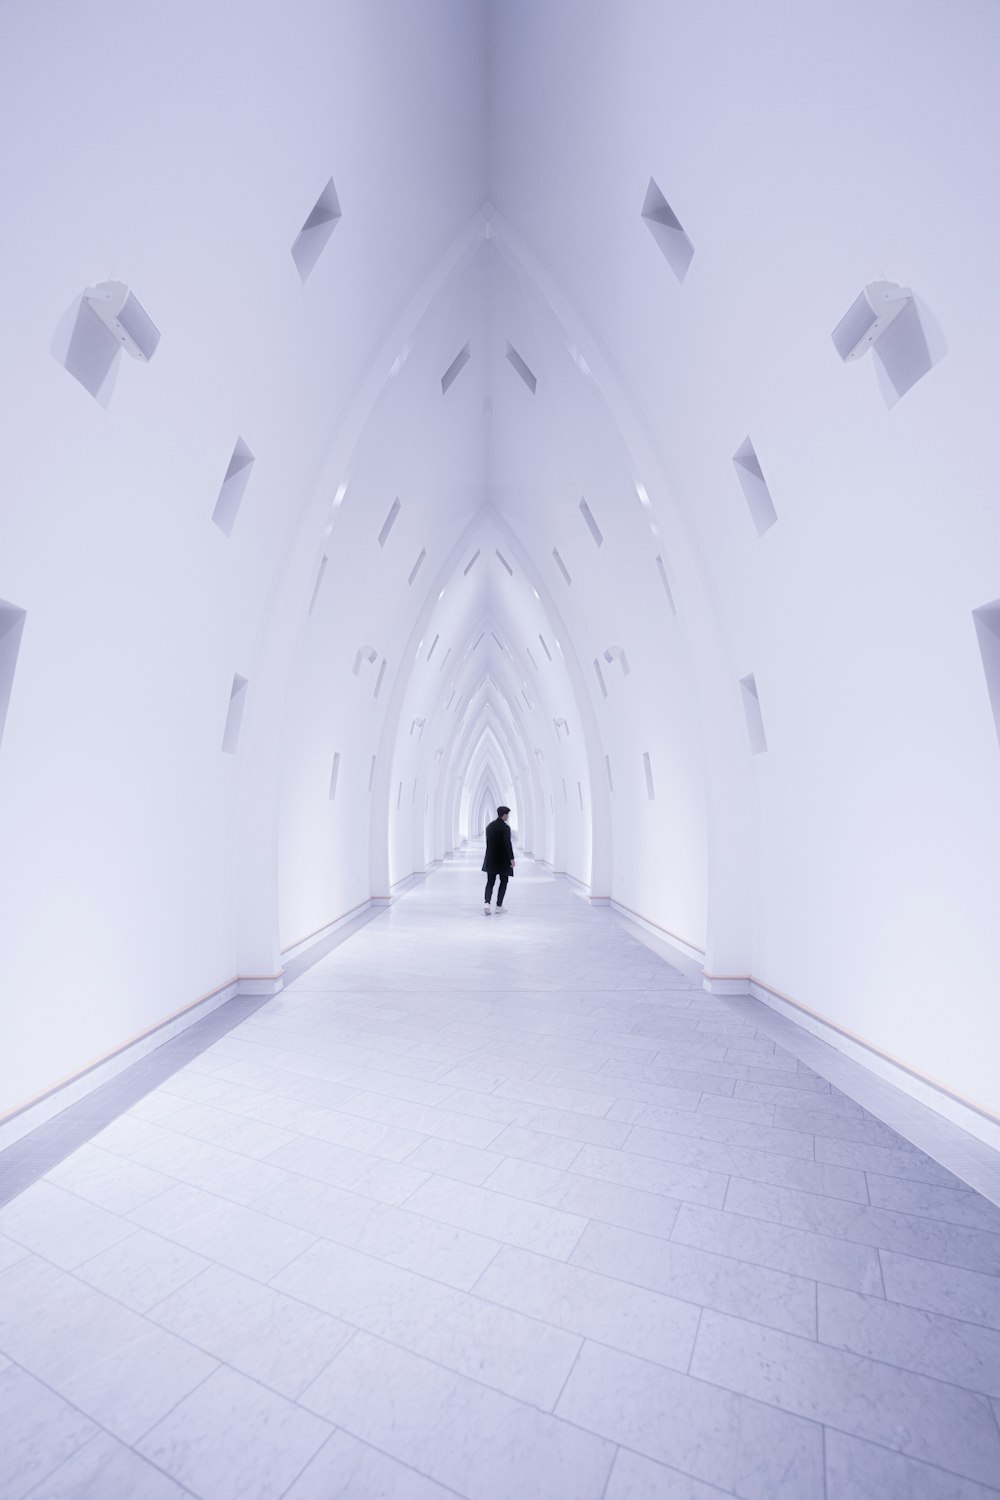 a person walking through a tunnel